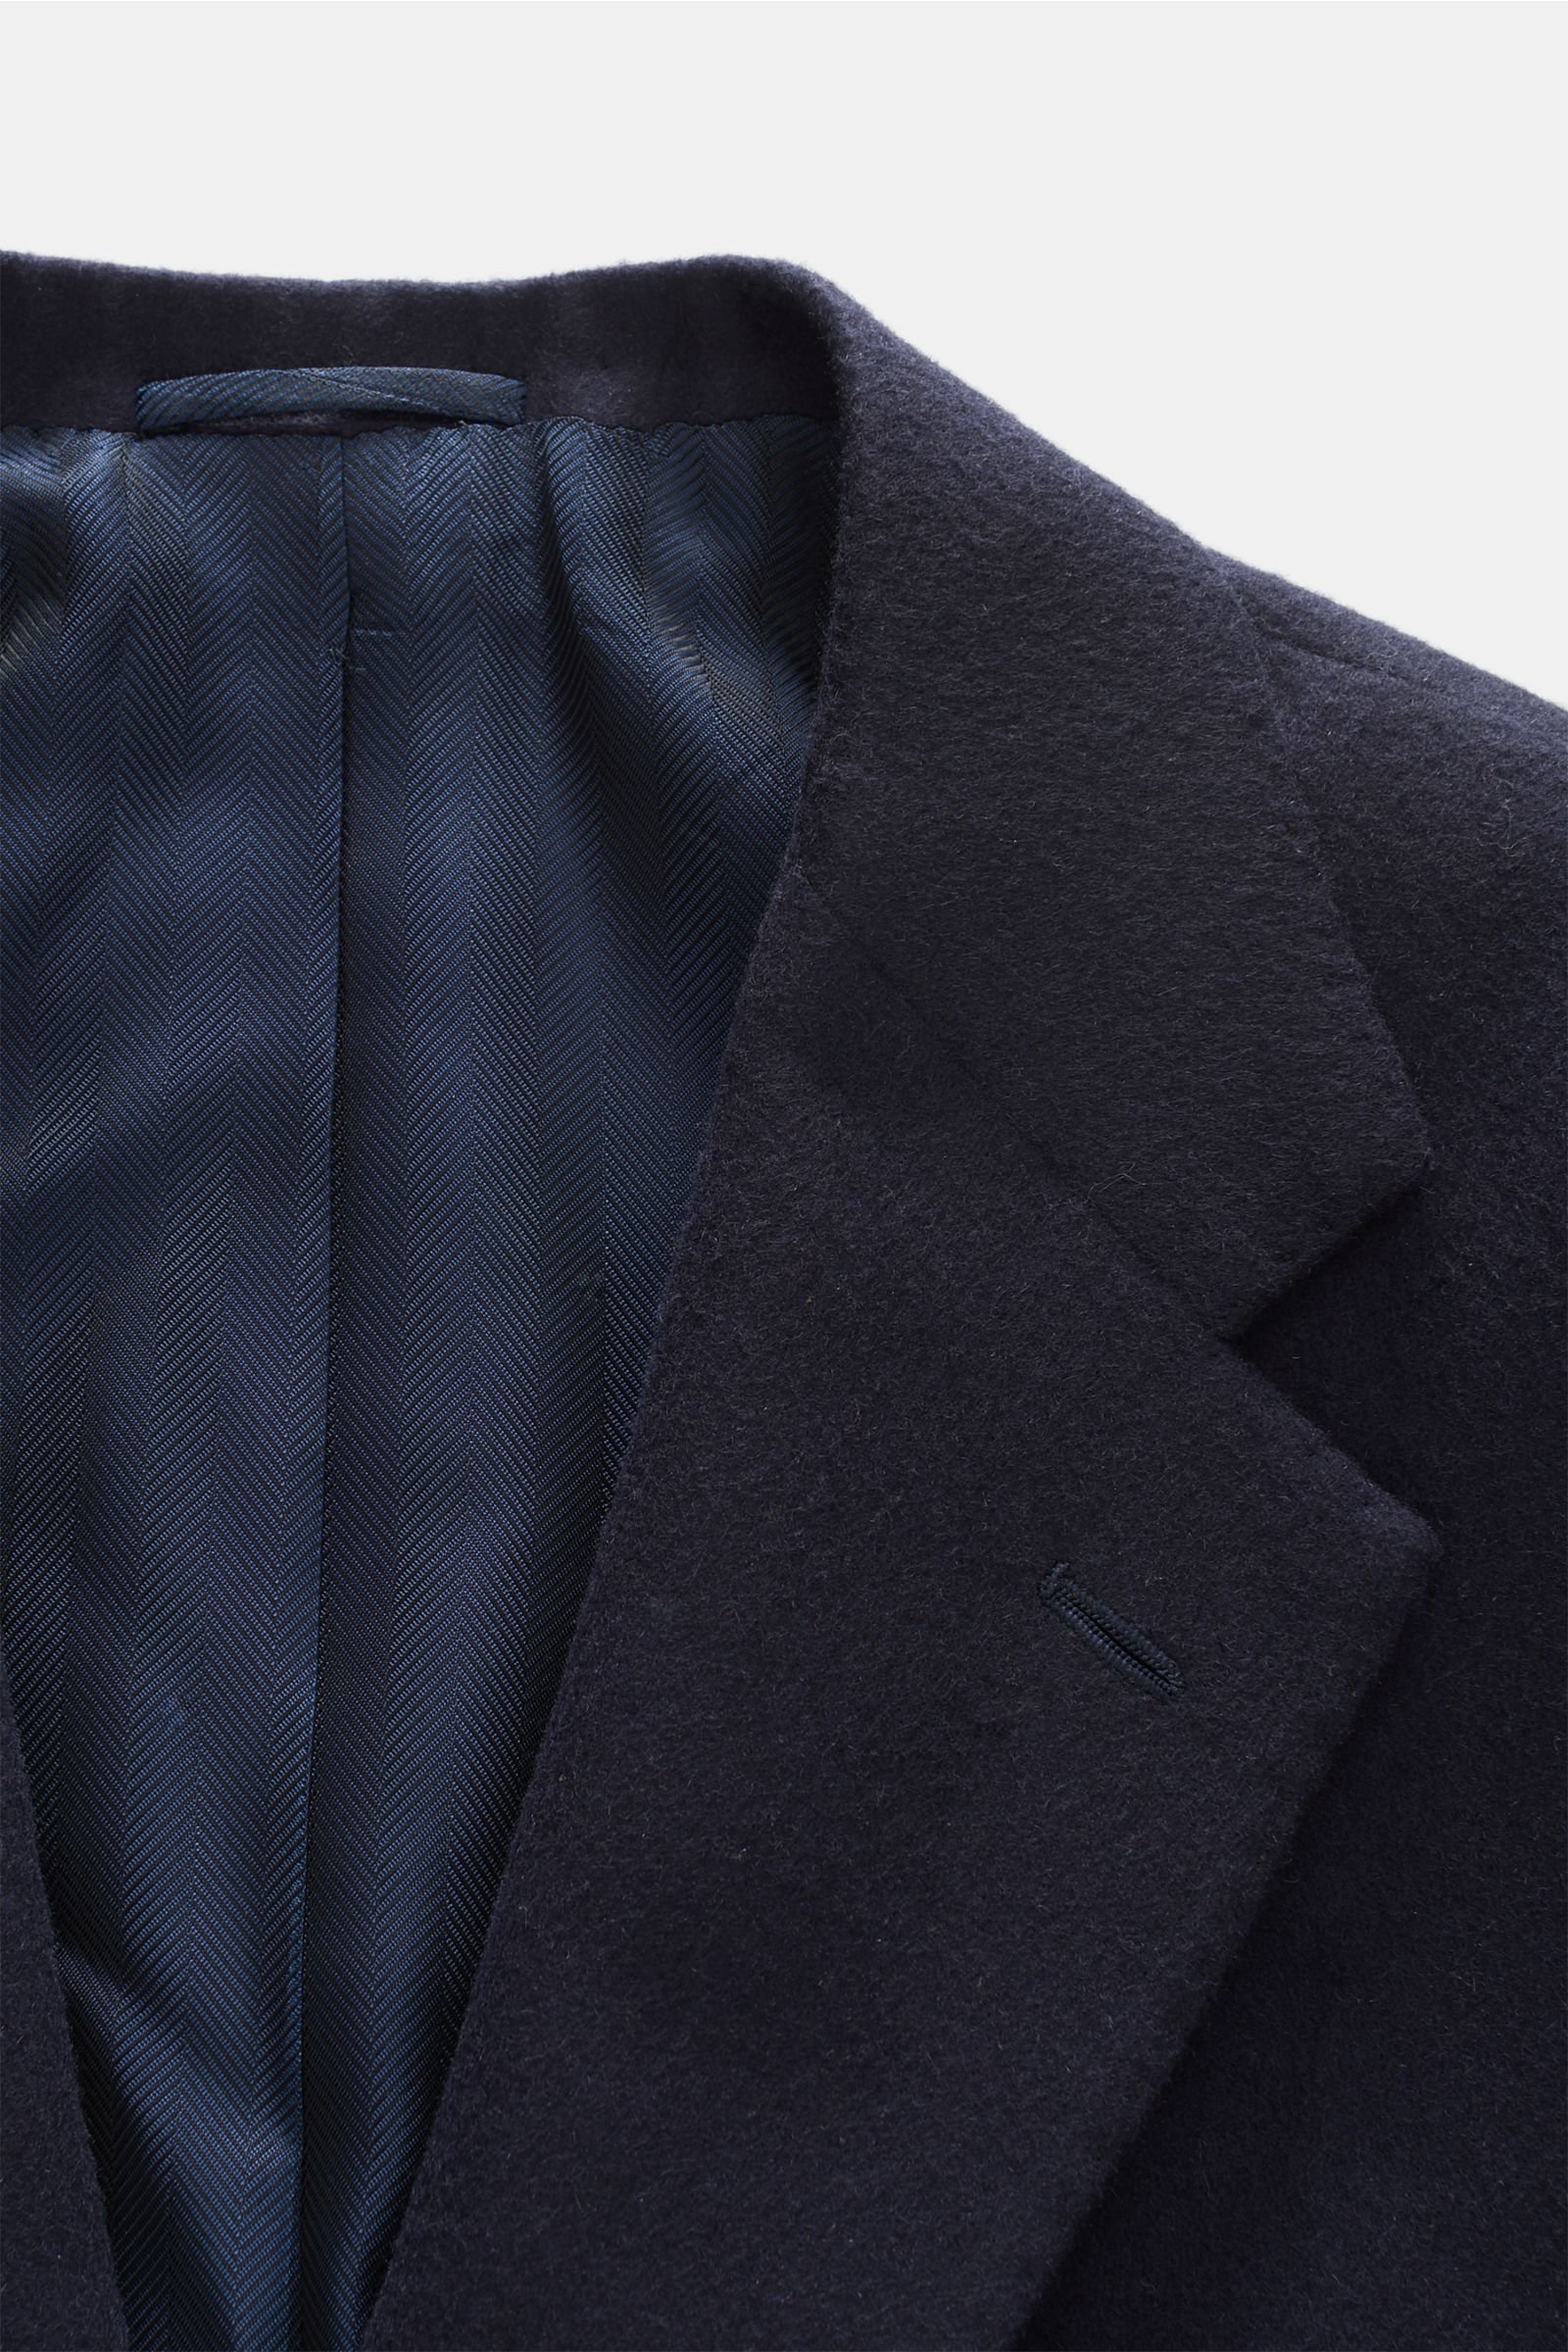 KITON cashmere coat navy | BRAUN Hamburg